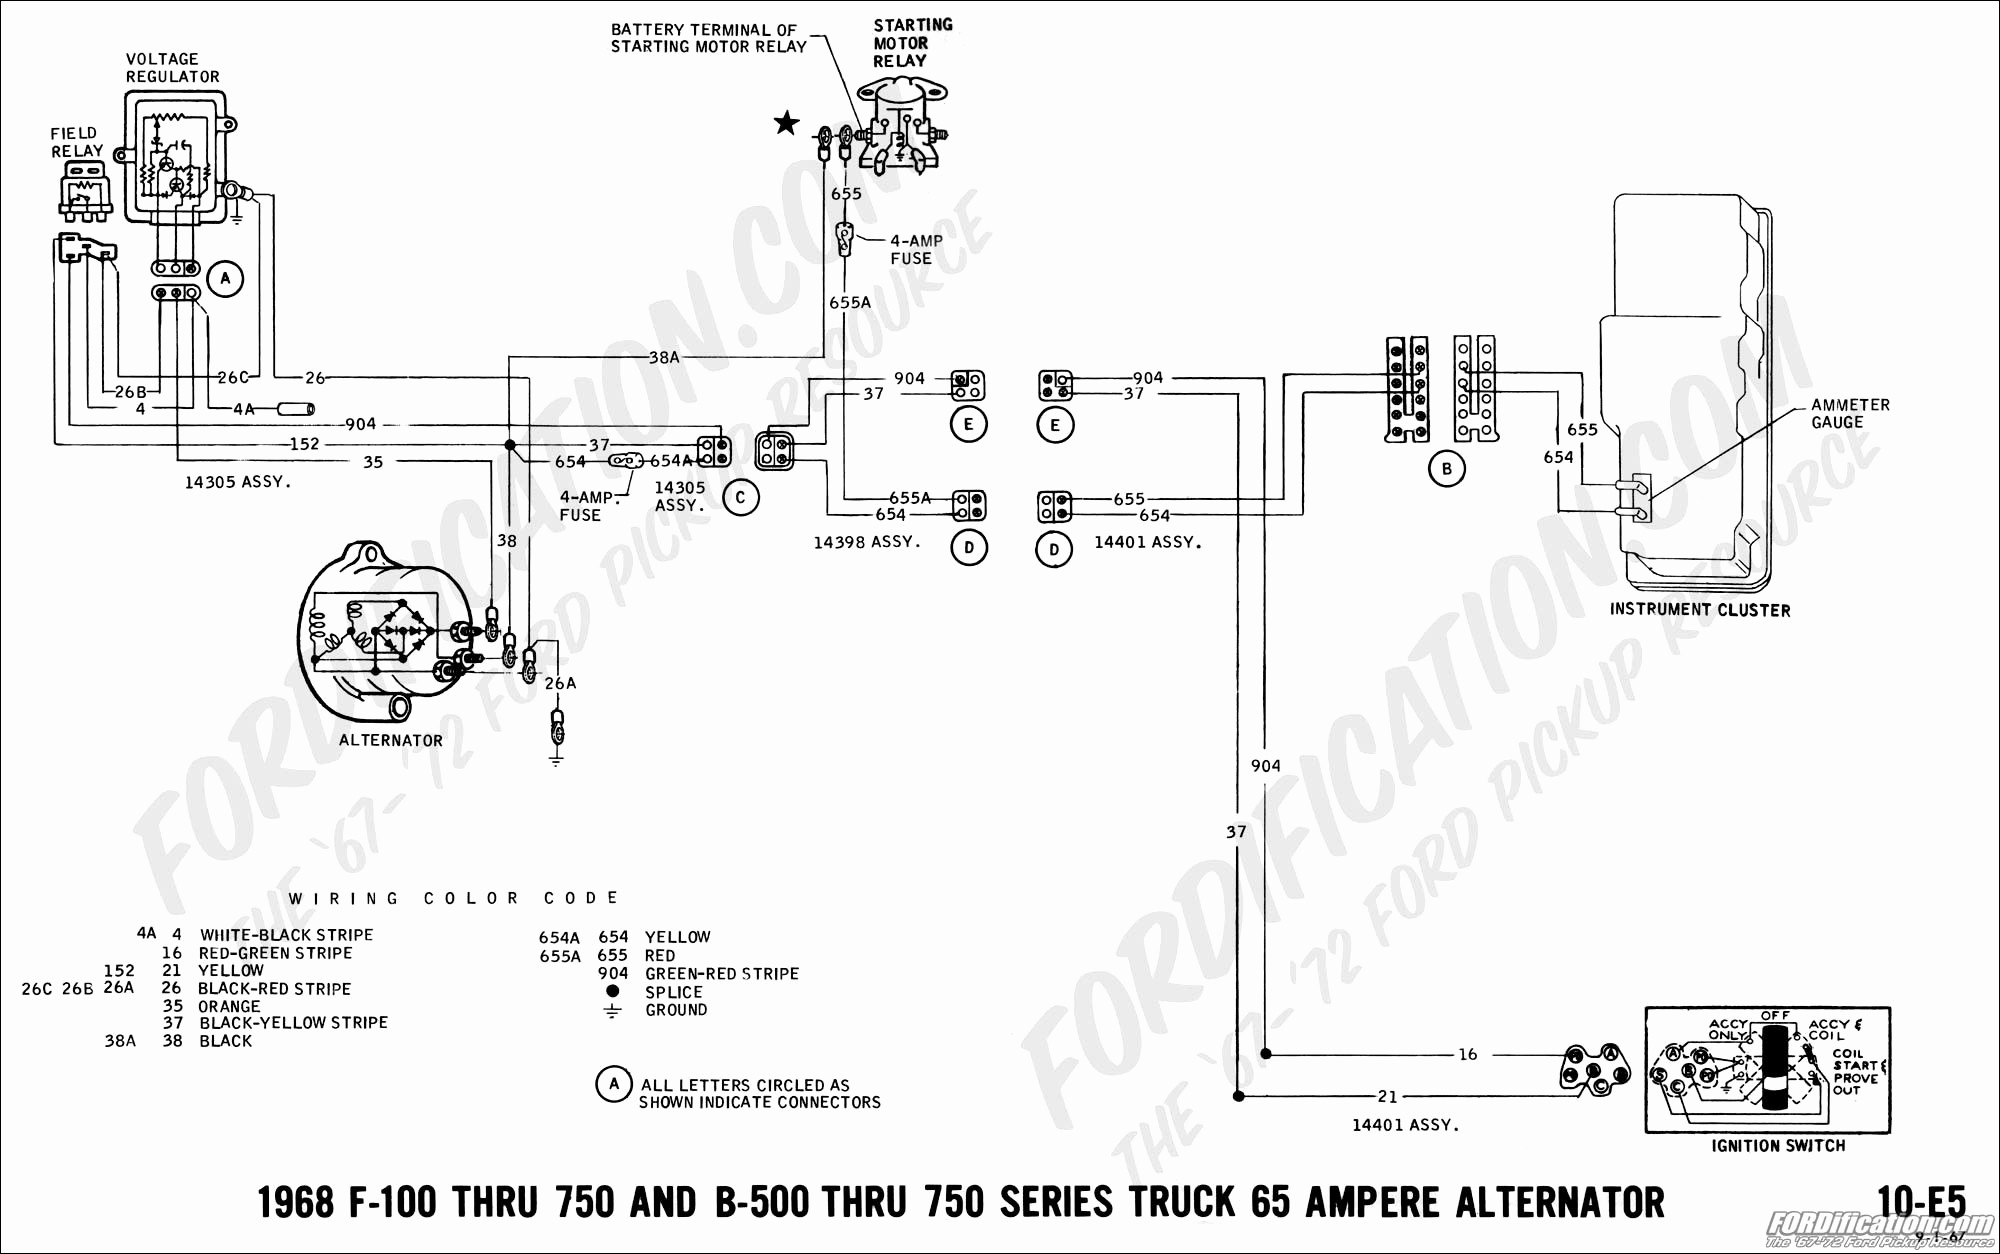 Powermaster Alternator Wiring Diagram Fresh Famous E Wire Alternator Wiring Diagram ford Gallery Electrical